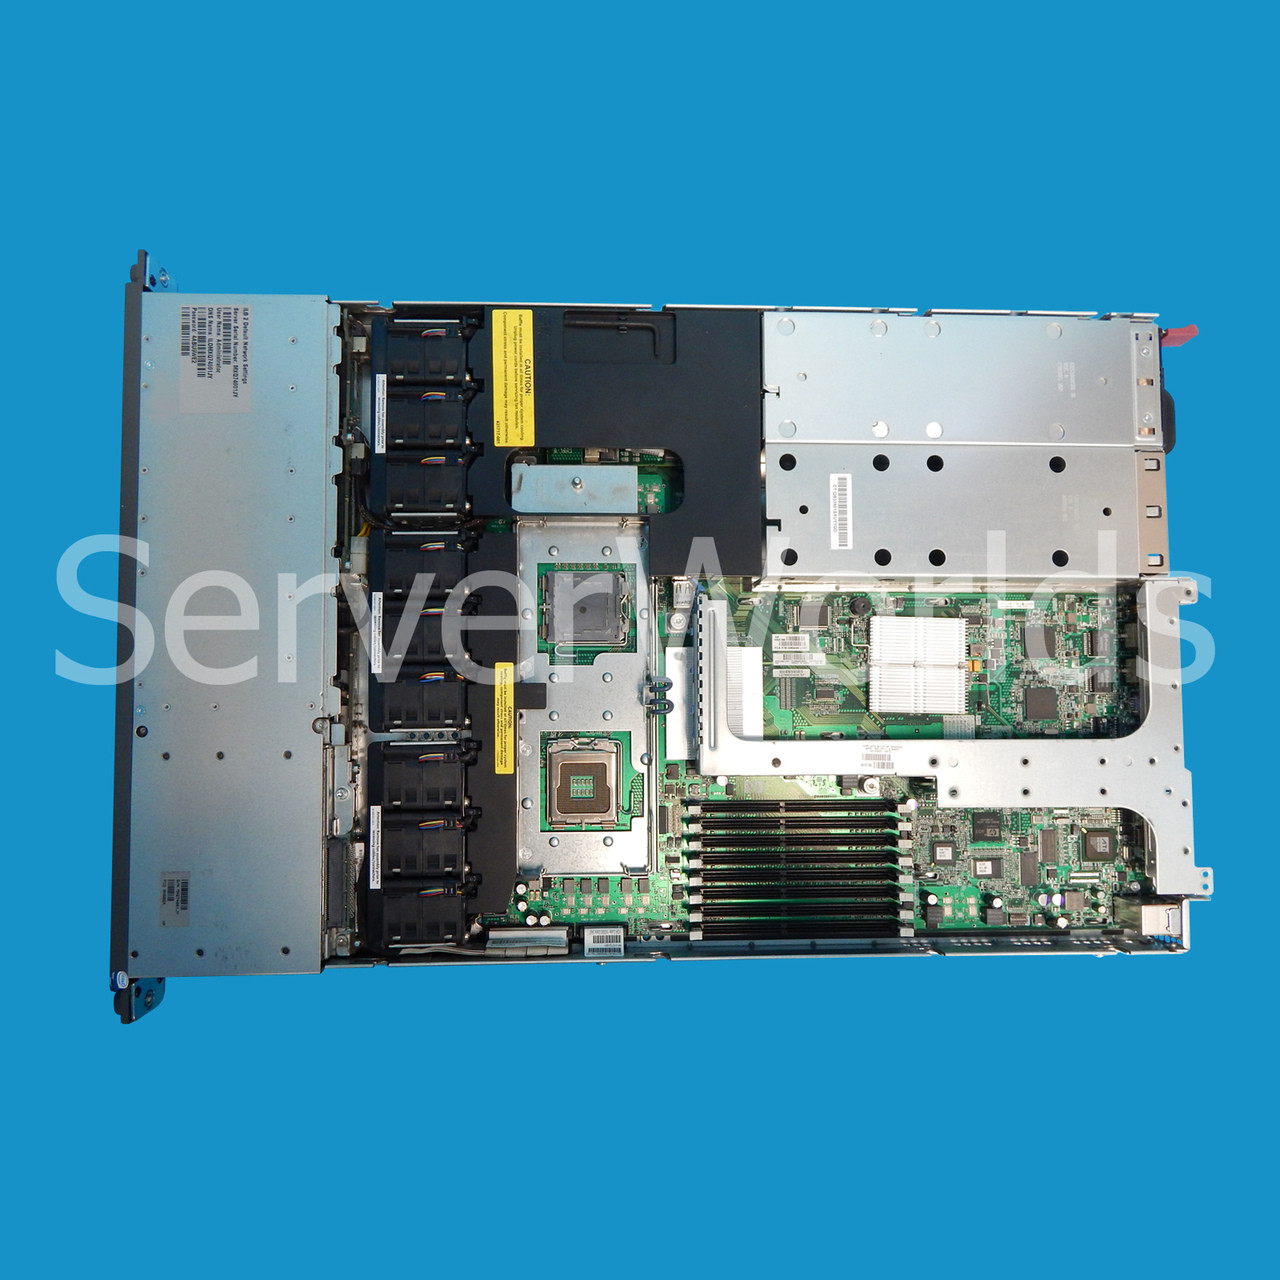 Refurbished HP DL360 G5, 2 x QC E5420 2.5Ghz, 4GB 459960-005